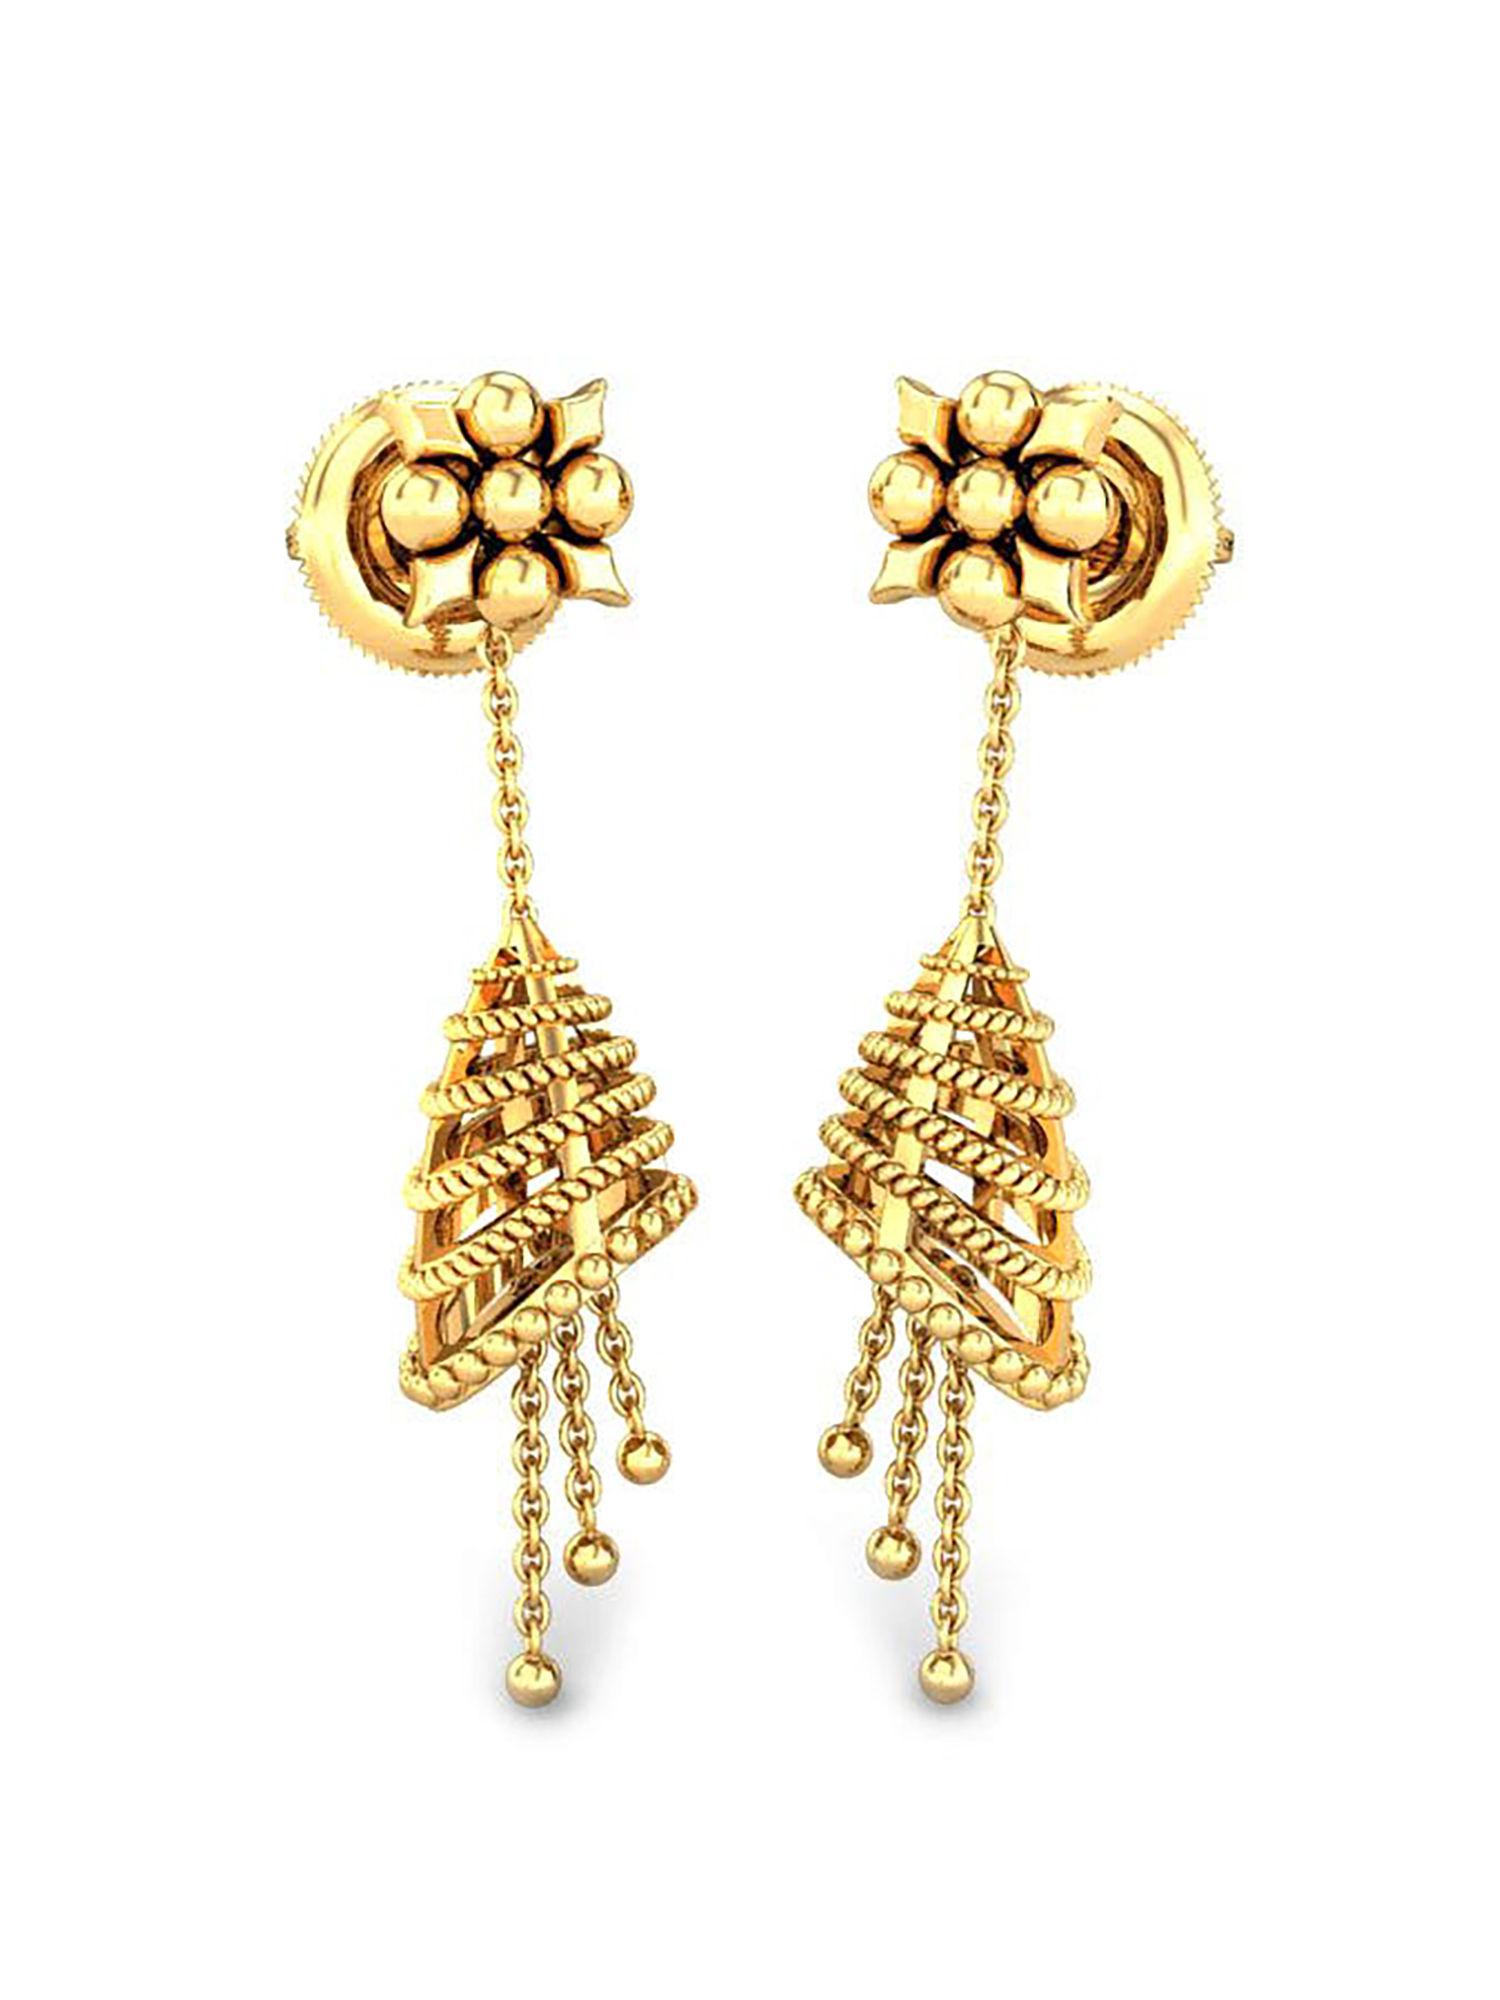 18k (750) bis hallmark yellow gold jhumki earring for women